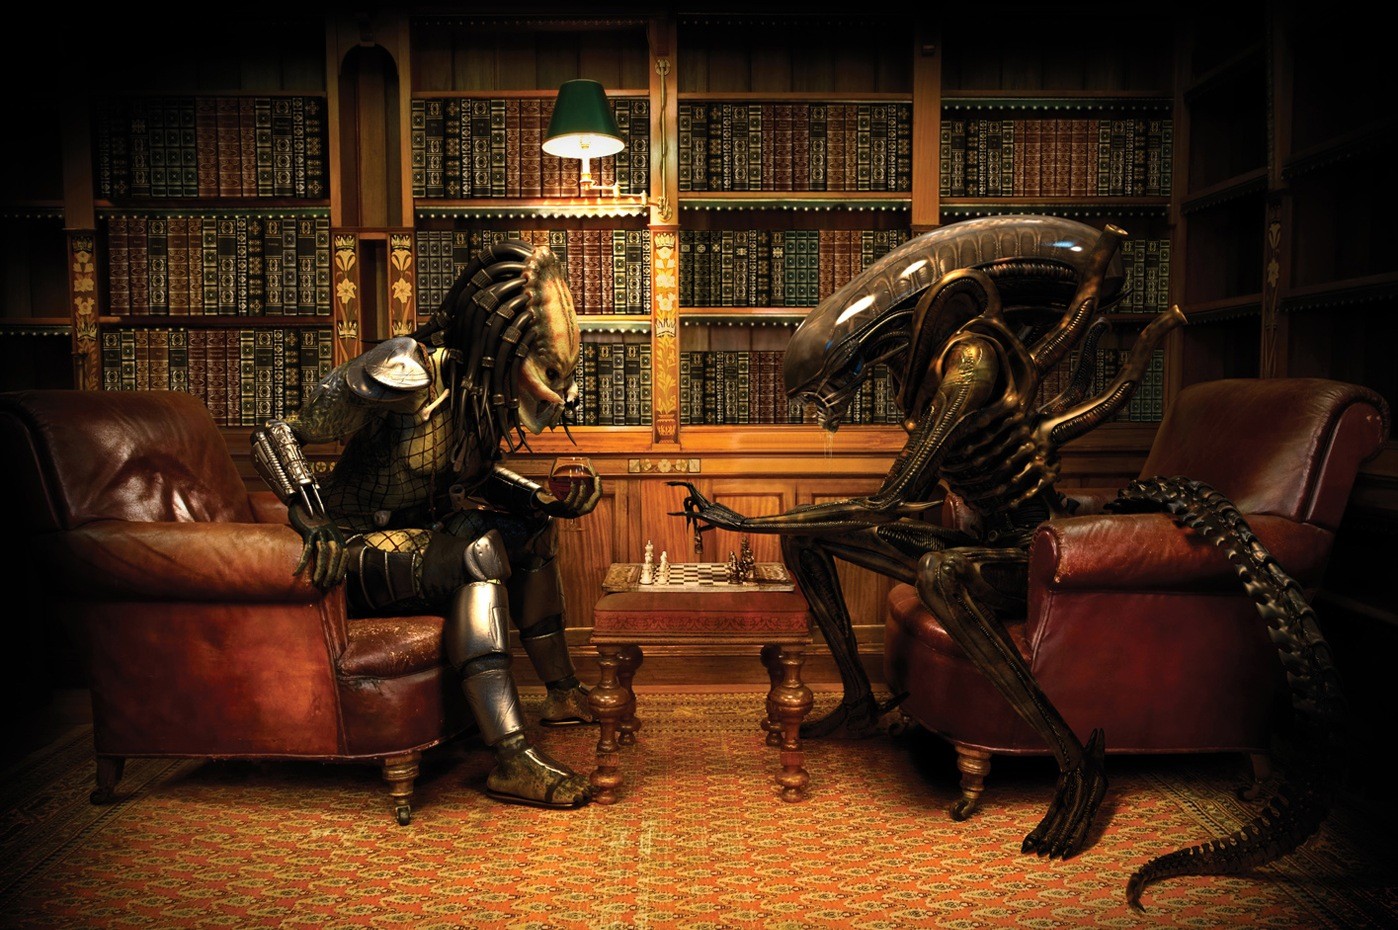 General 1398x930 chess books Xenomorph creature predator (creature) CGI digital art science fiction horror